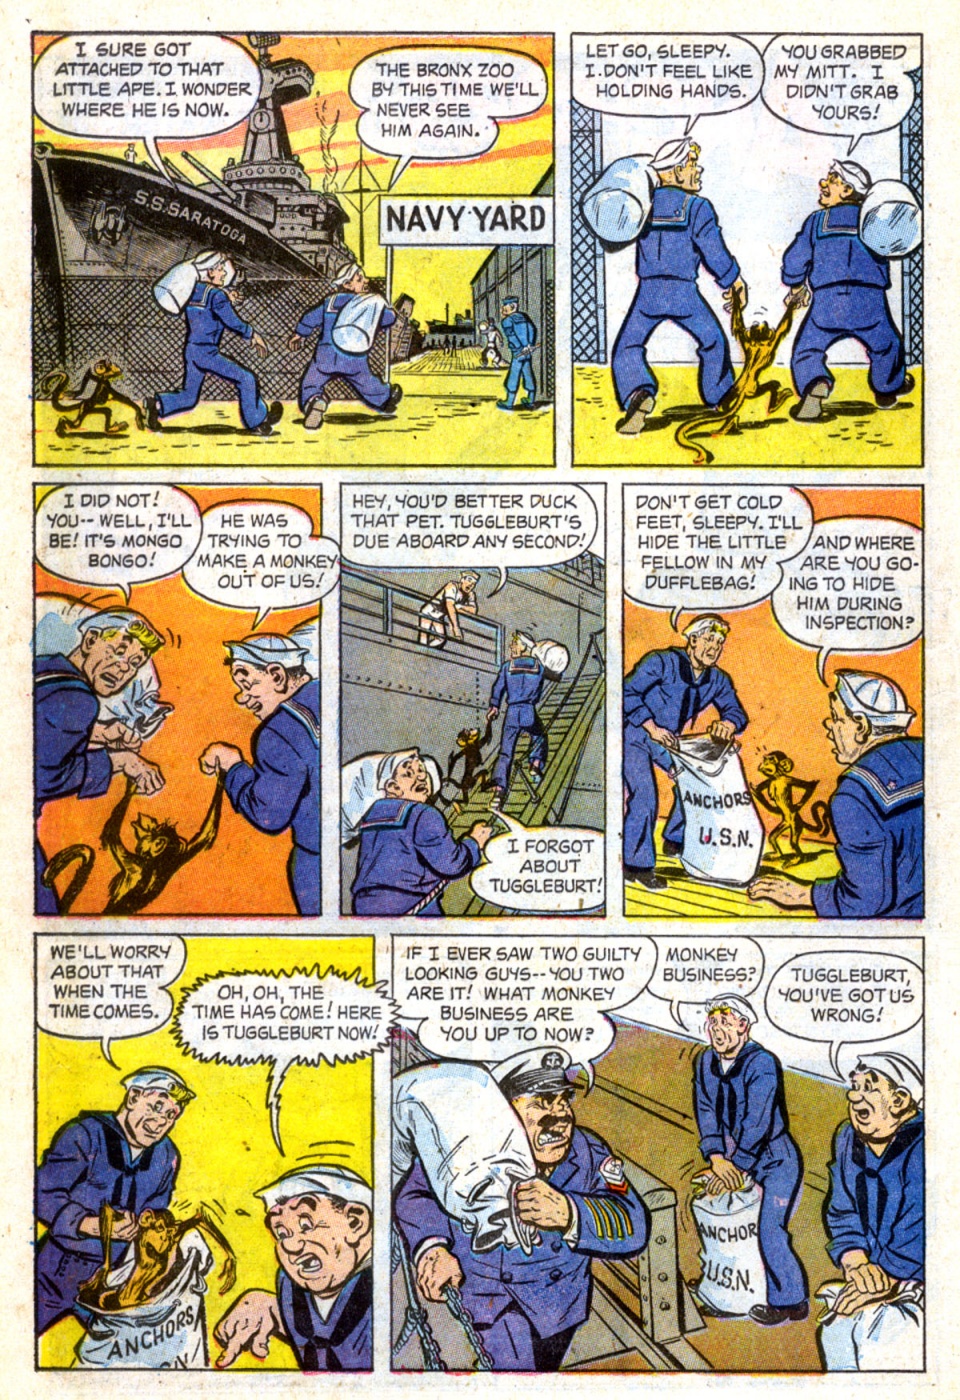 Anchors the Salt Water Daffy - Comics (c) (16)